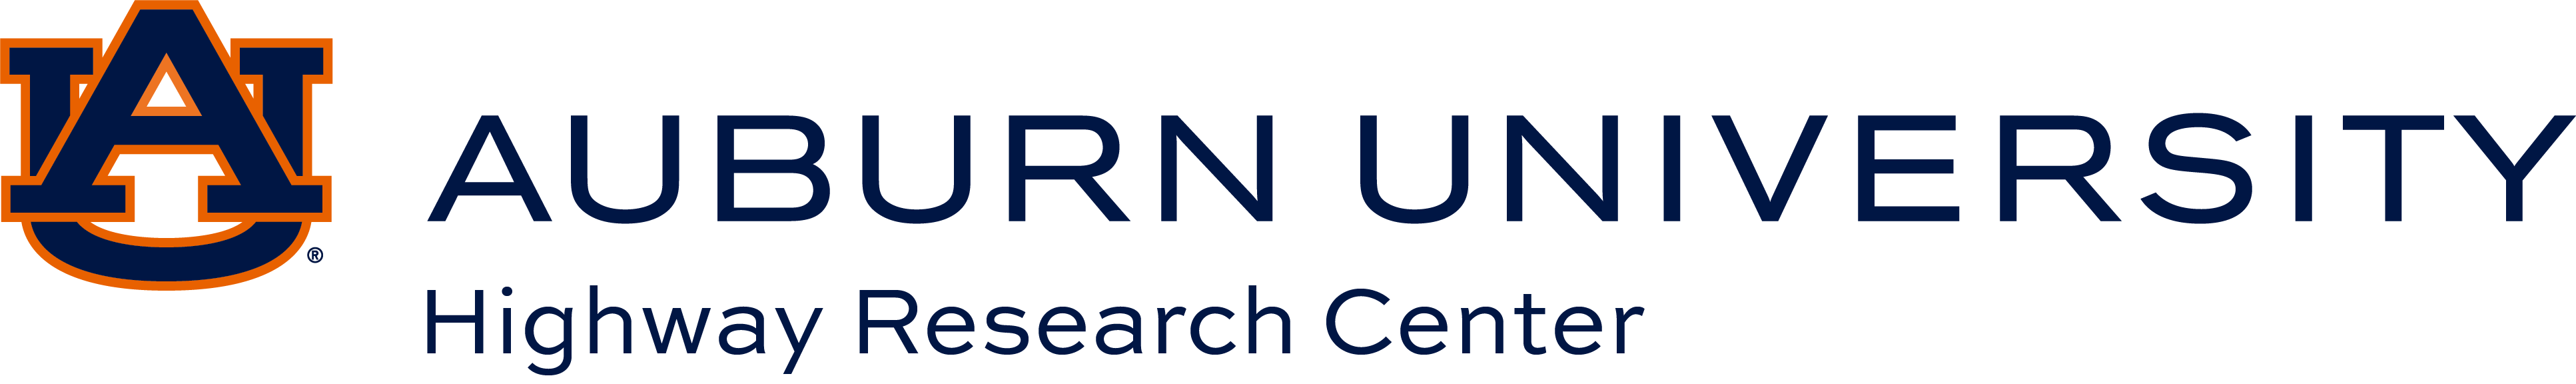 Auburn Engineering Logo